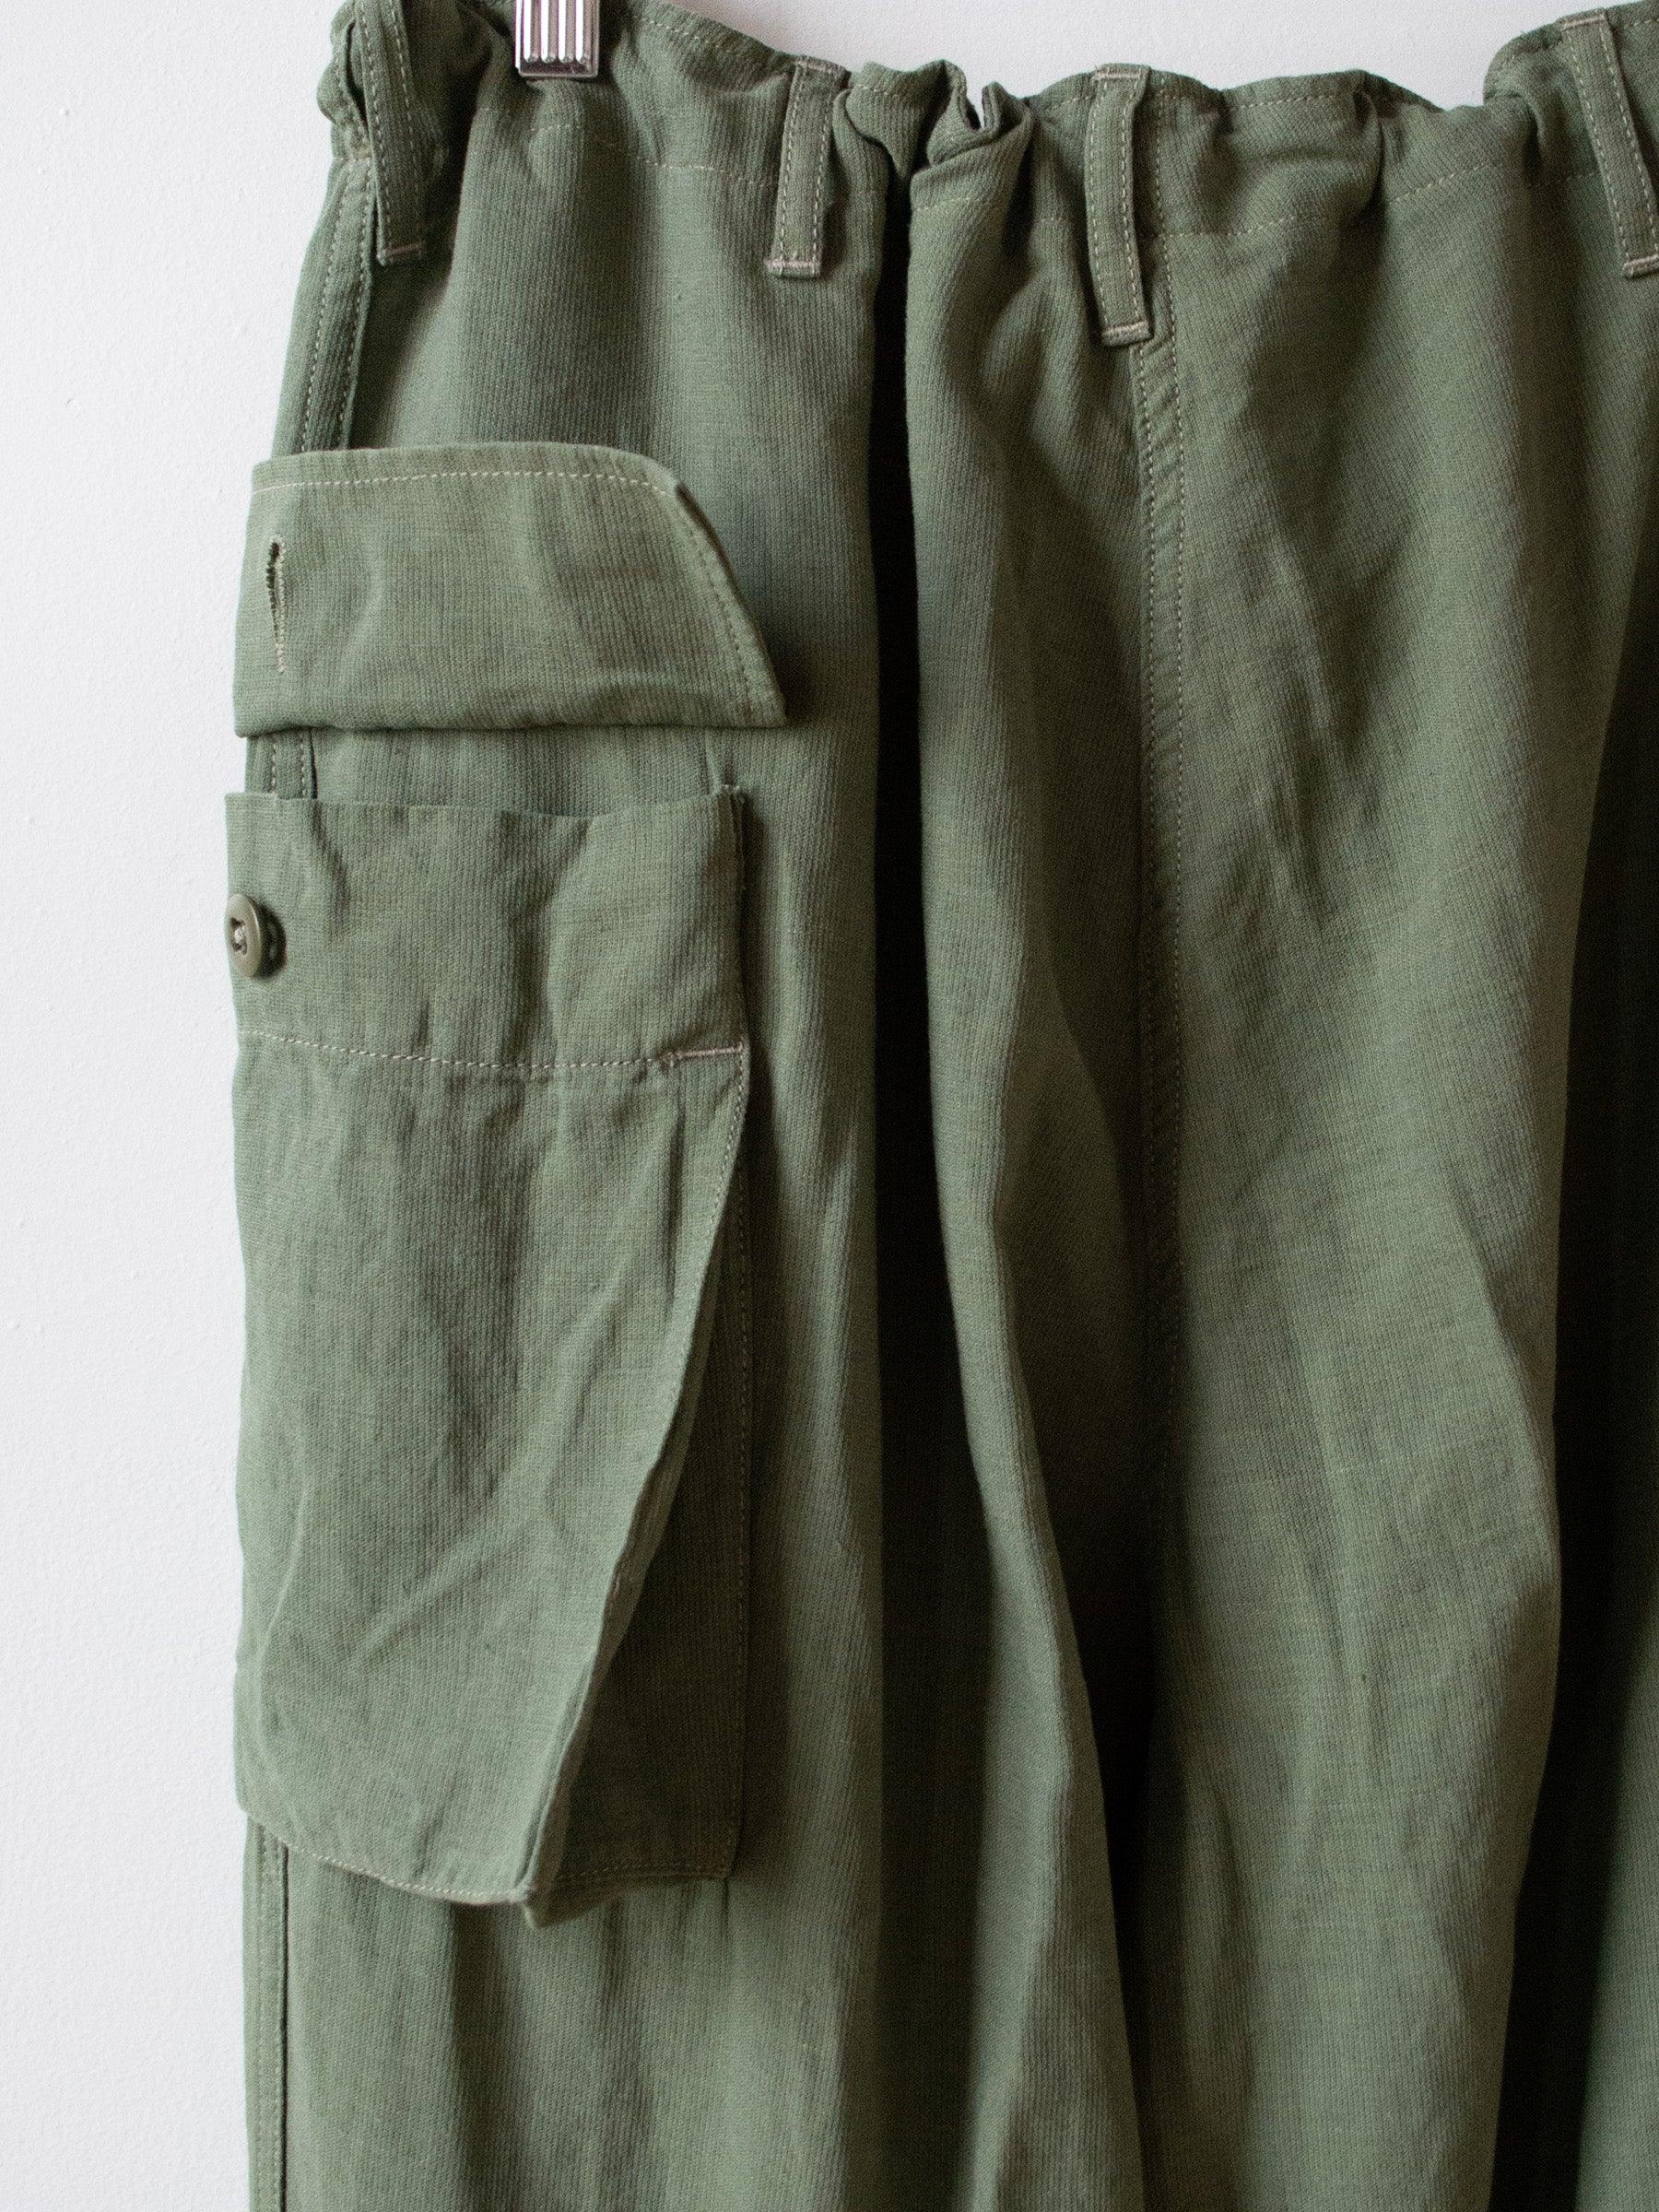 Namu Shop - Kaptain Sunshine Safari Mesh M43 Cargo Pants - Olive